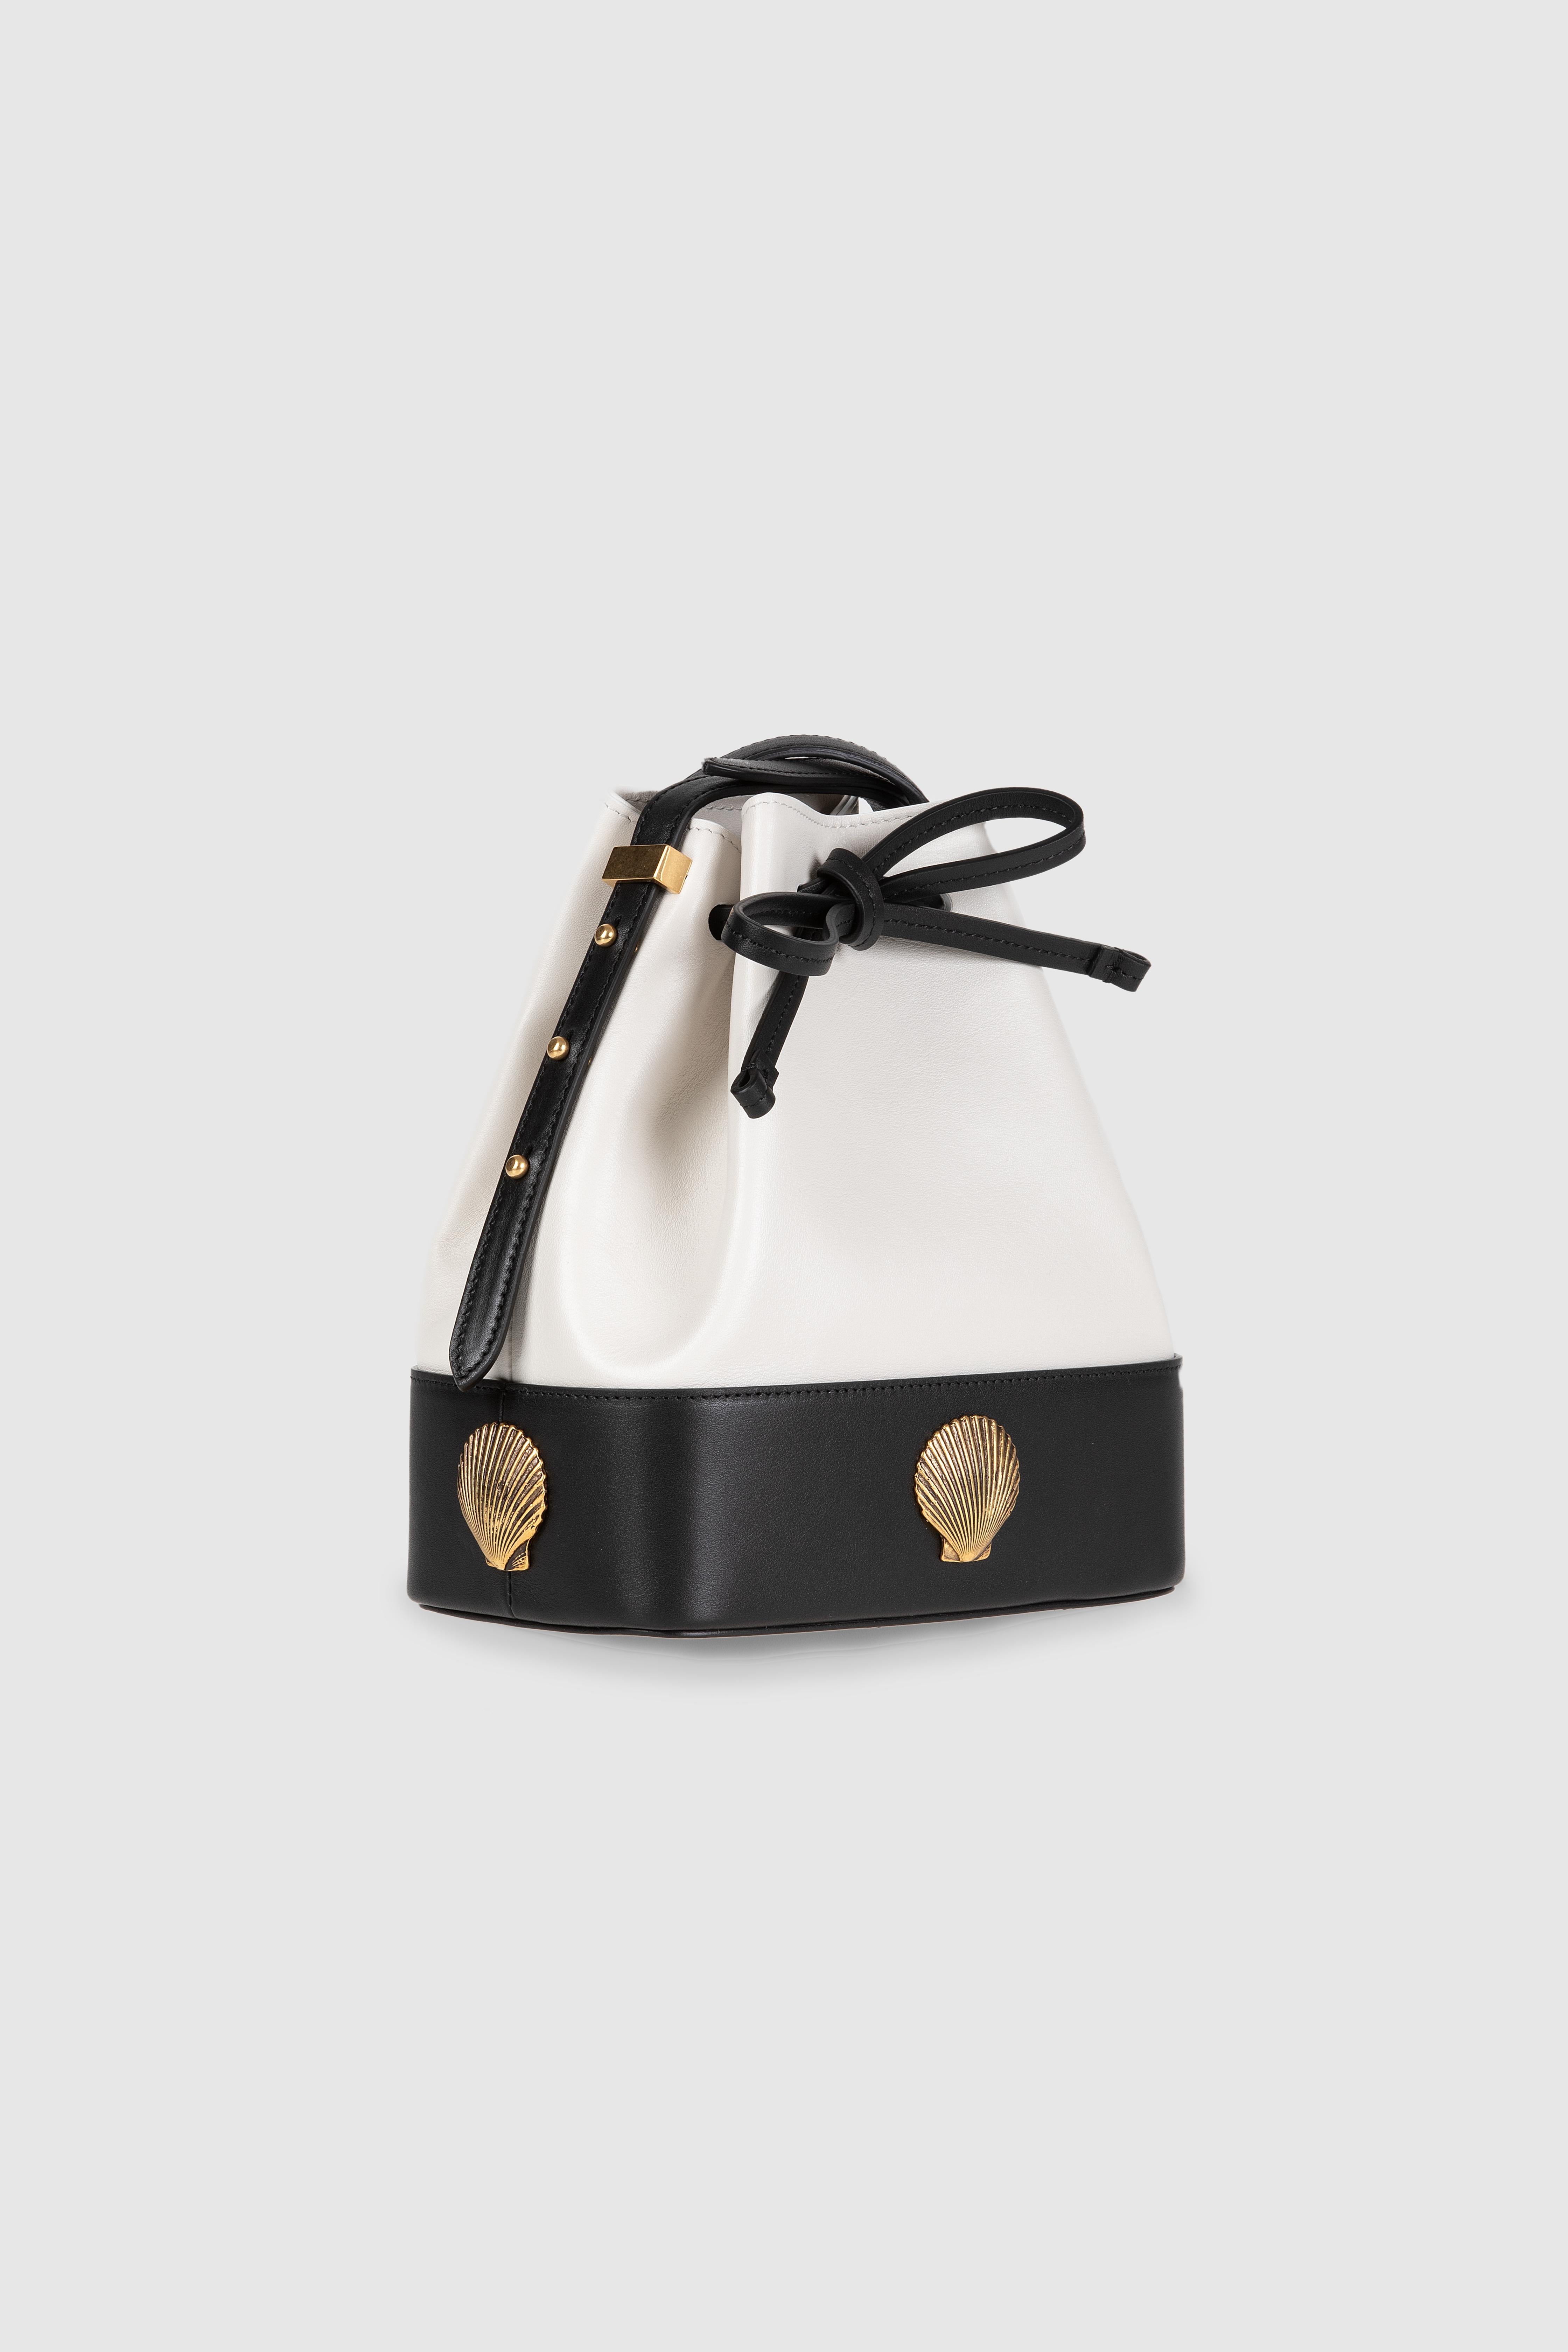 Bucket small bag in calfskin leather with adjustable shoulder strap. Gold vintange inspired shell decorations. 
Measurements: 19 w * 21 h * 11 depth cm 
